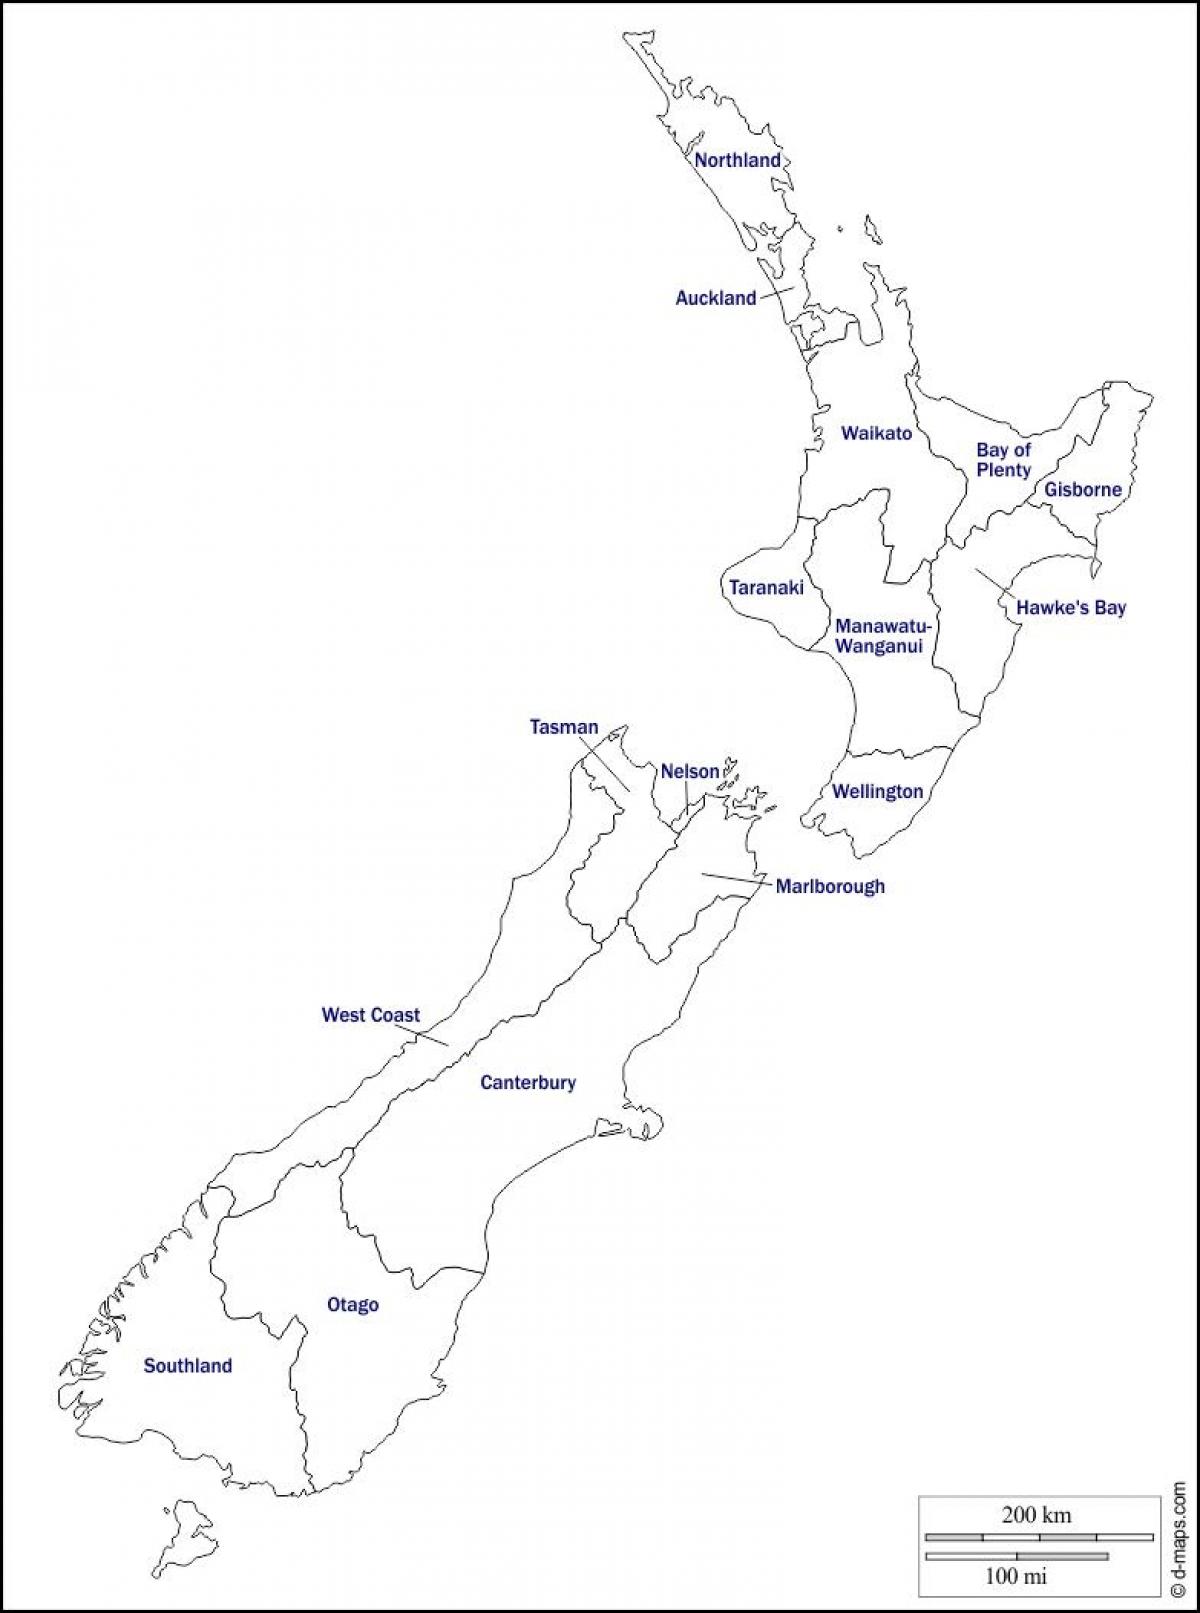 Mappa della Nuova Zelanda vuota